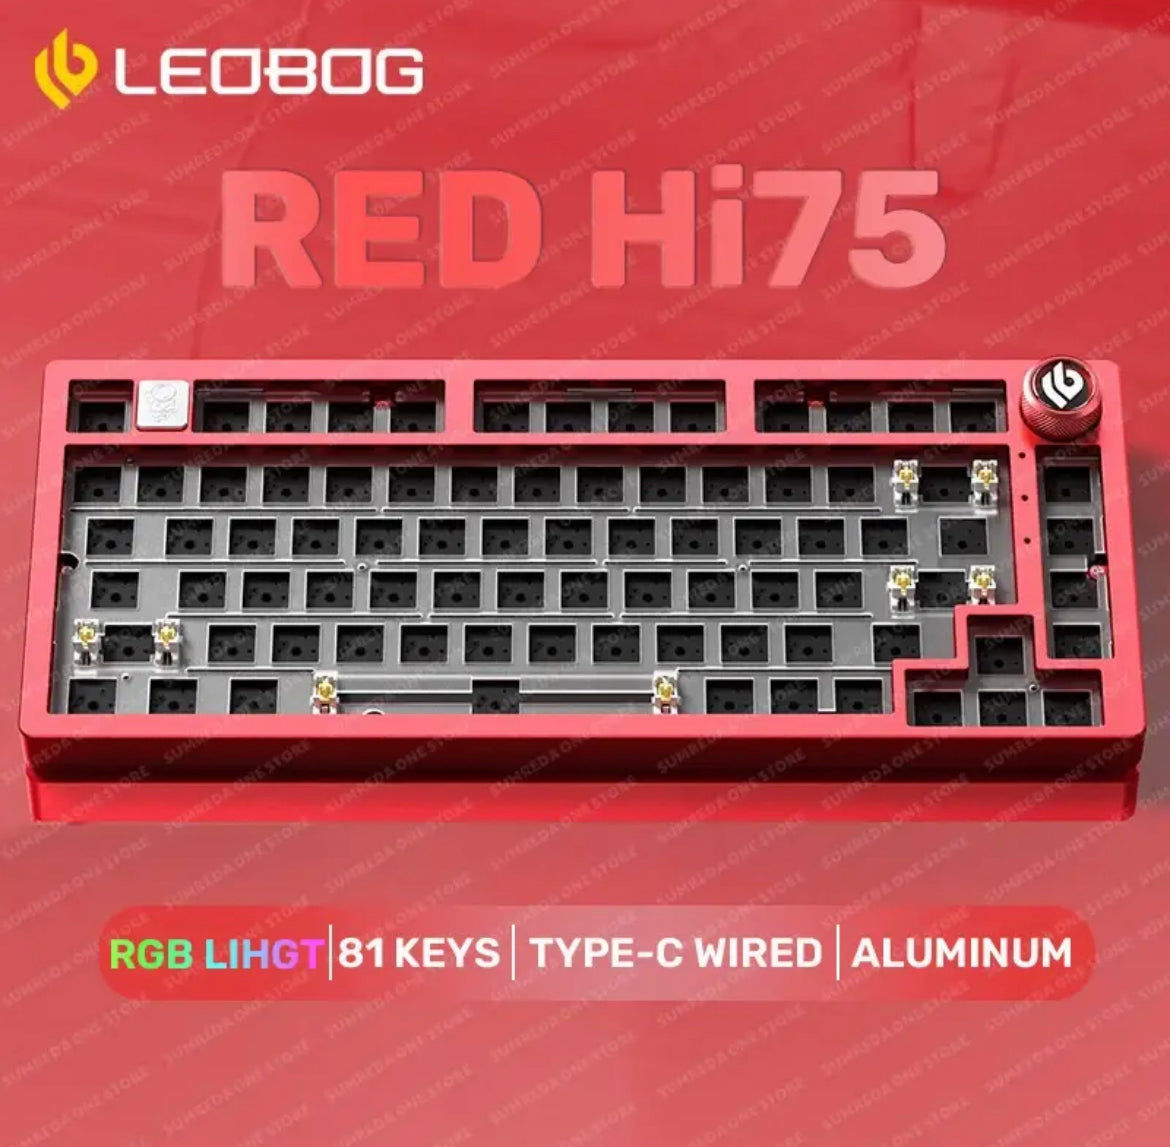 LEOBOG Hi75 Aluminum Alloy Wired Rgb Keyboard Kit